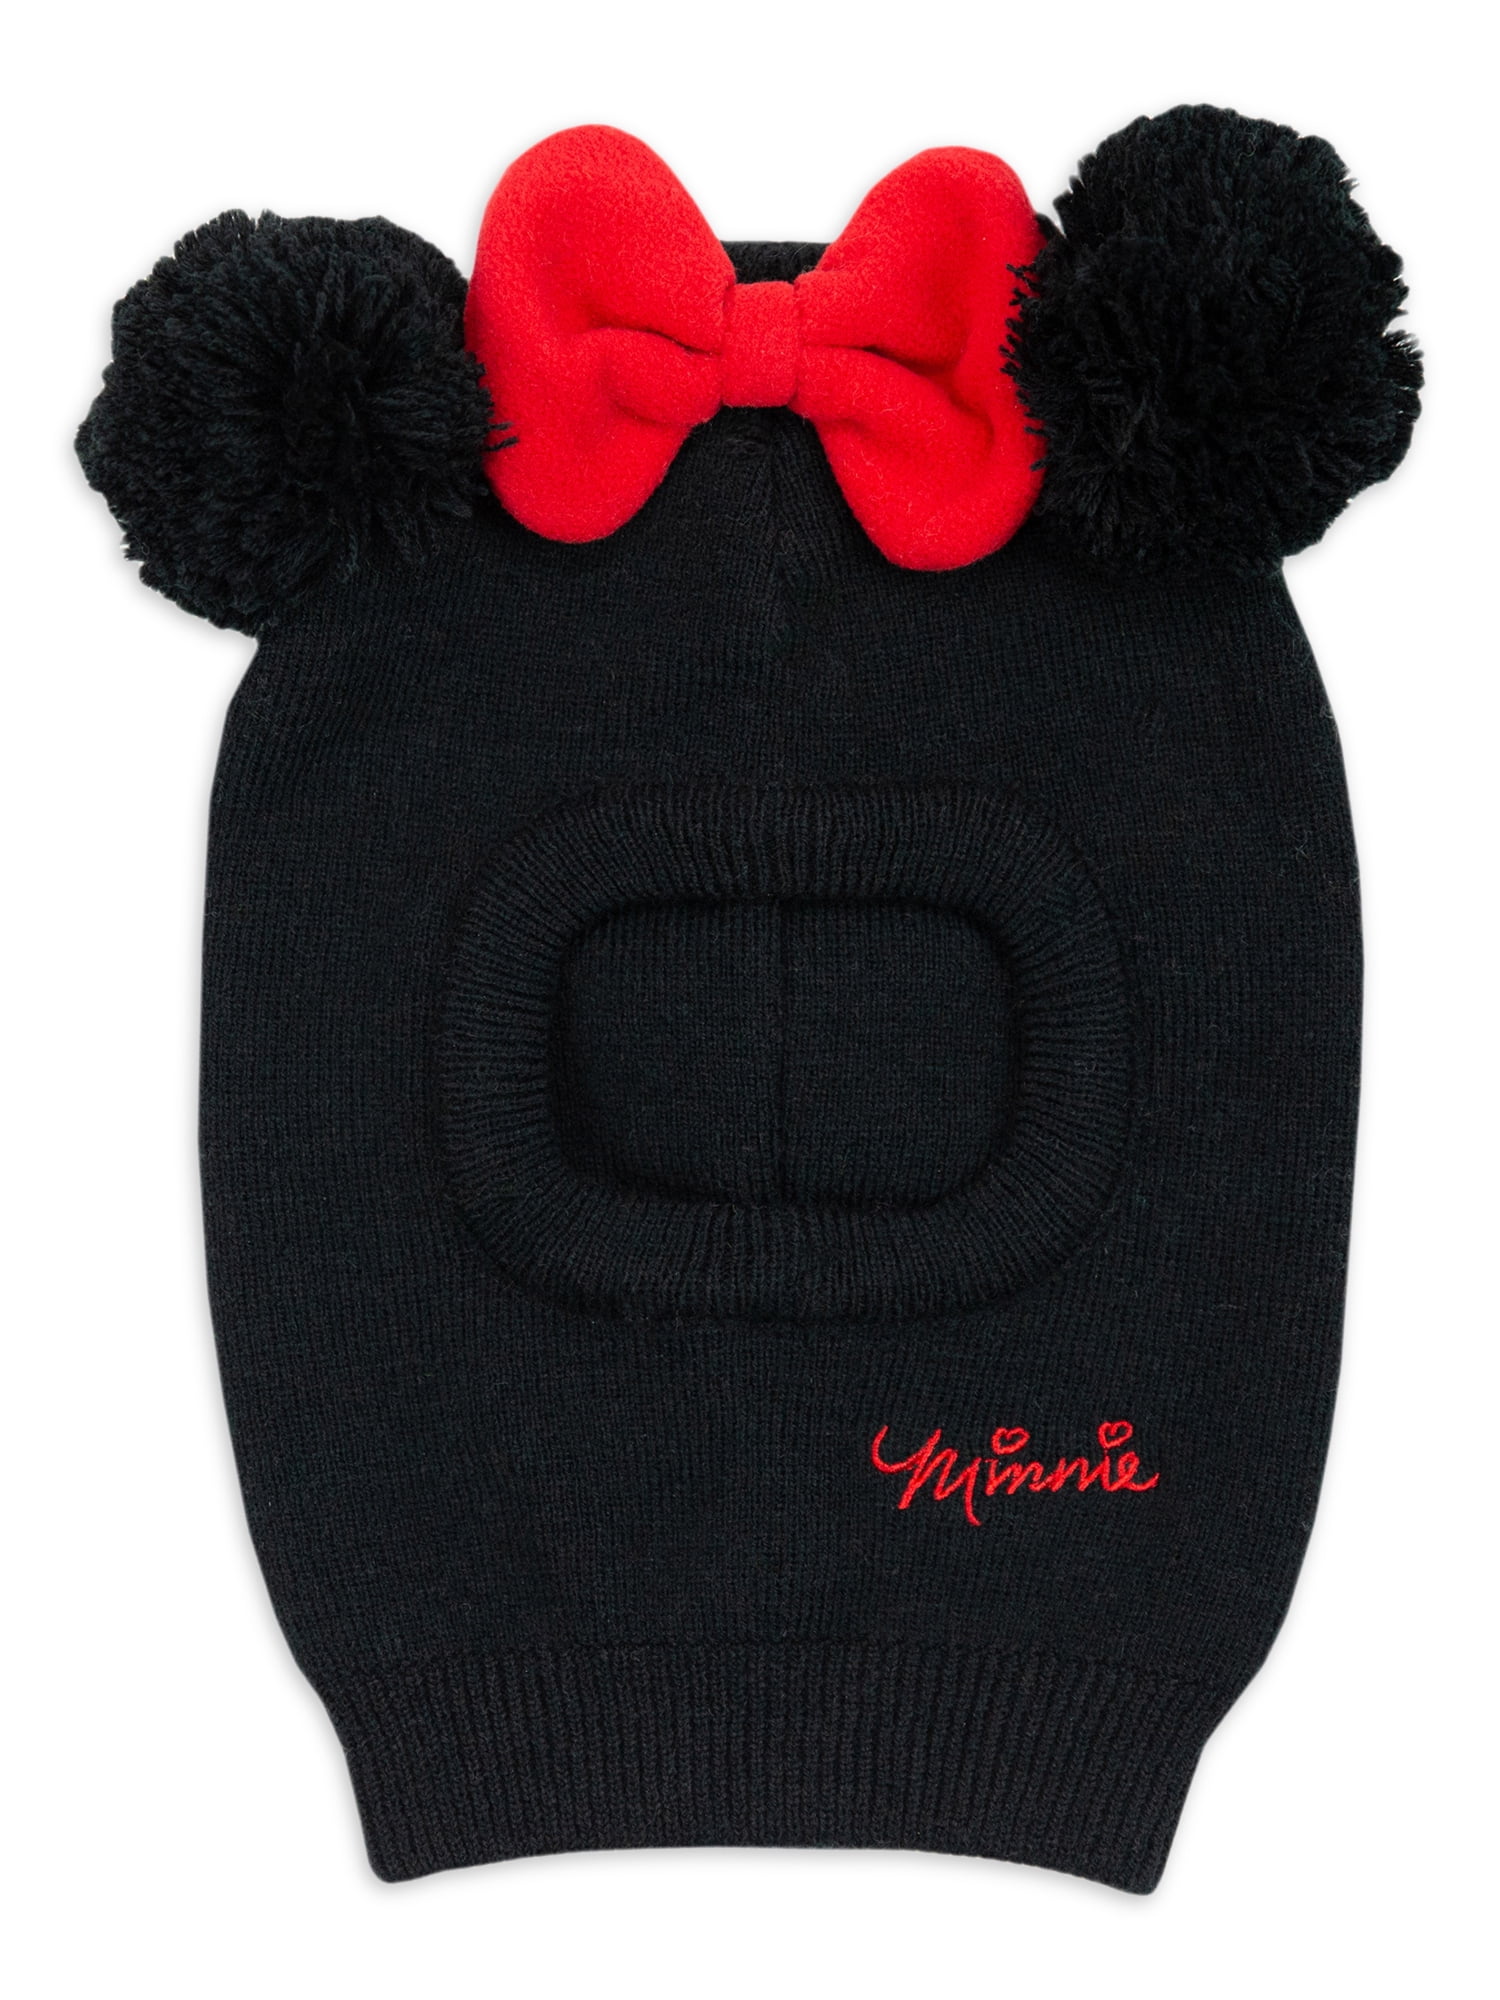 Minnie Mouse Brand Girls Child Black Balaclava Style Hat